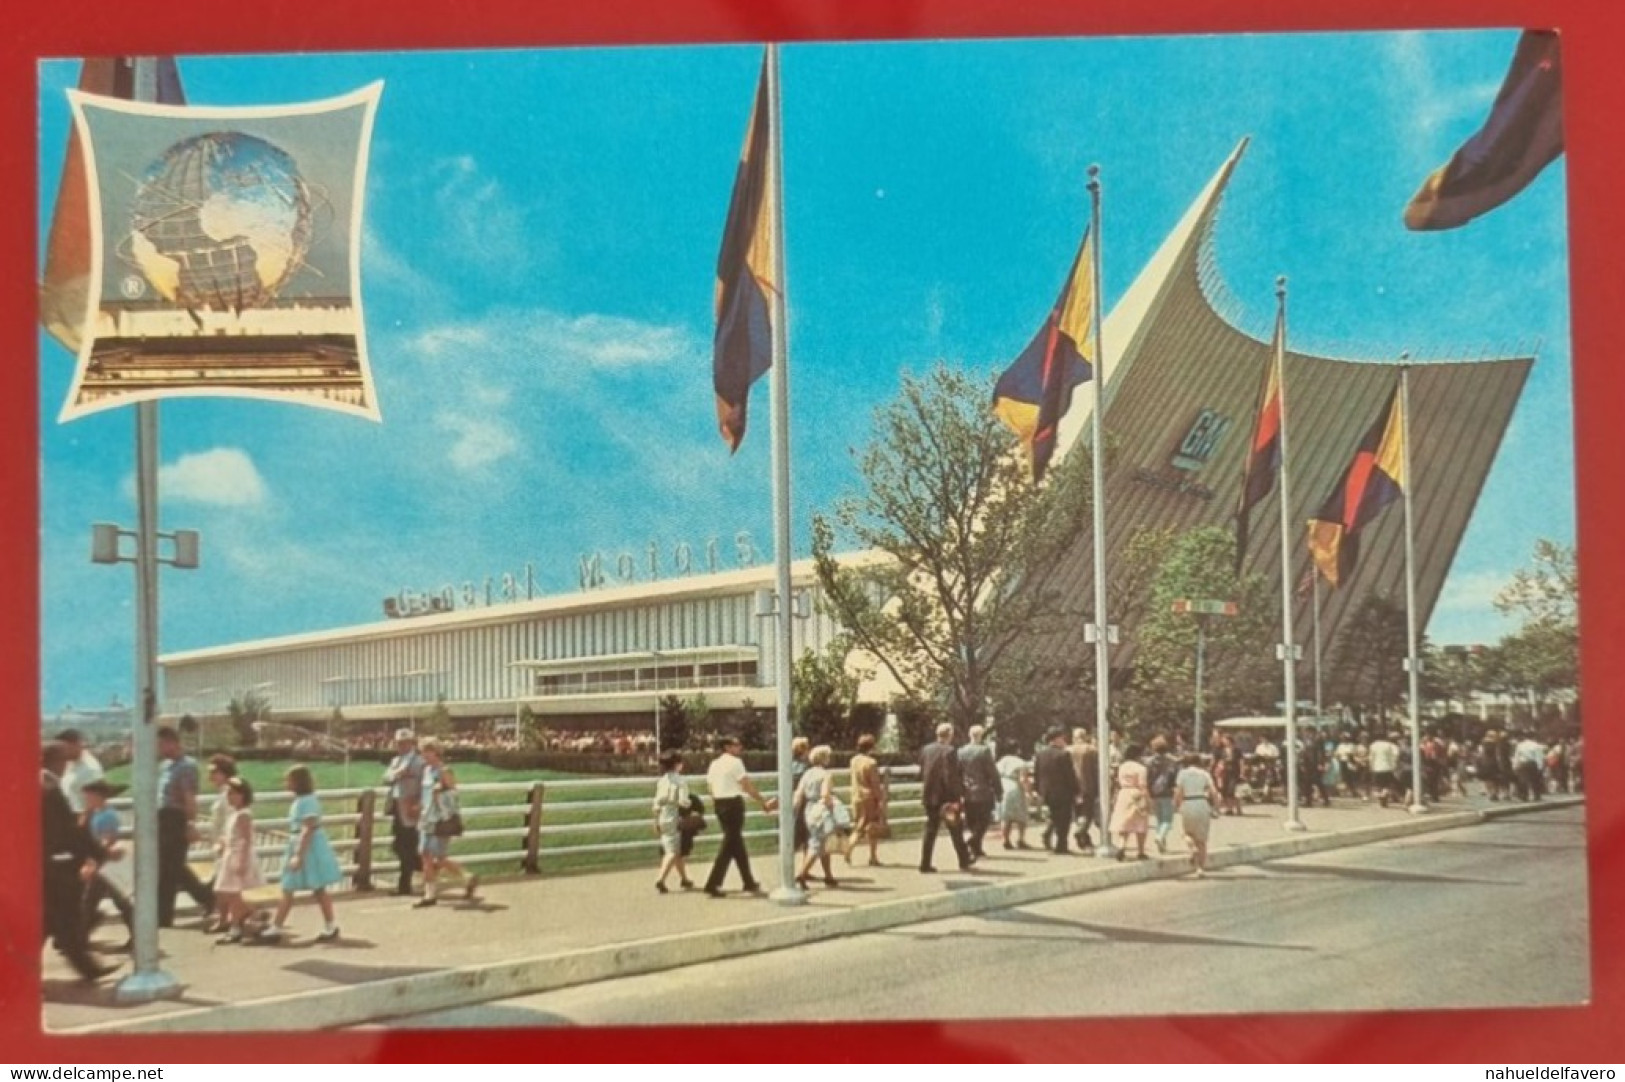 Uncirculated Postcard - USA - NY, NEW YORK WORLD'S FAIR 1964-65 - GENERAL MOTORS FUTURAMA BUILDING - Expositions